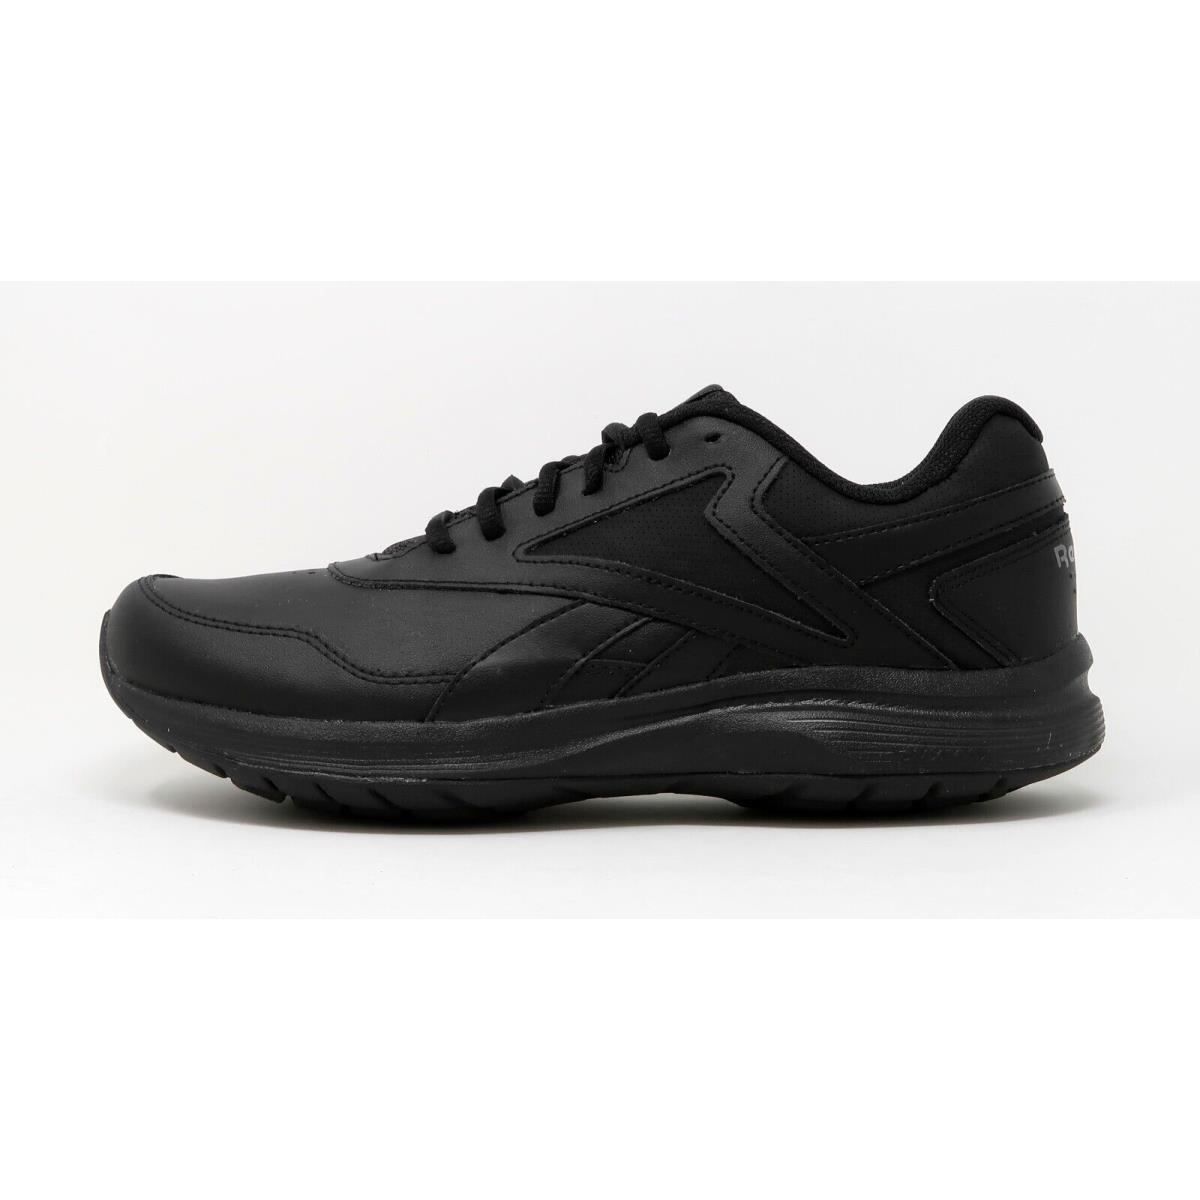 Reebok Walk Ultra 7 Dmx Max Black Leather Women Shoes Sneakers